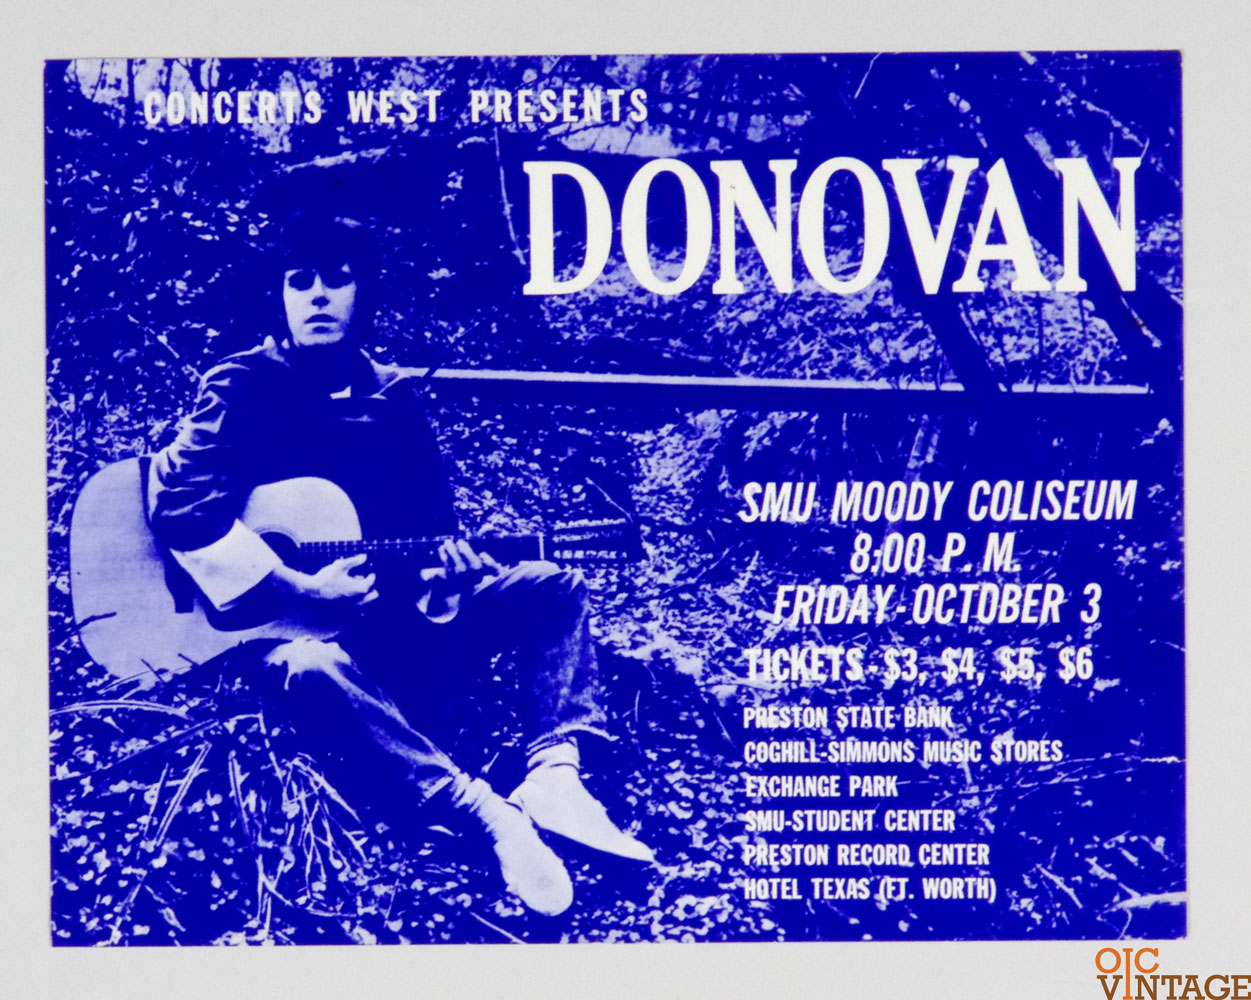 Donovan Poster Mini 1968 Oct 3 SMU Moody Coliseum Dallas TX